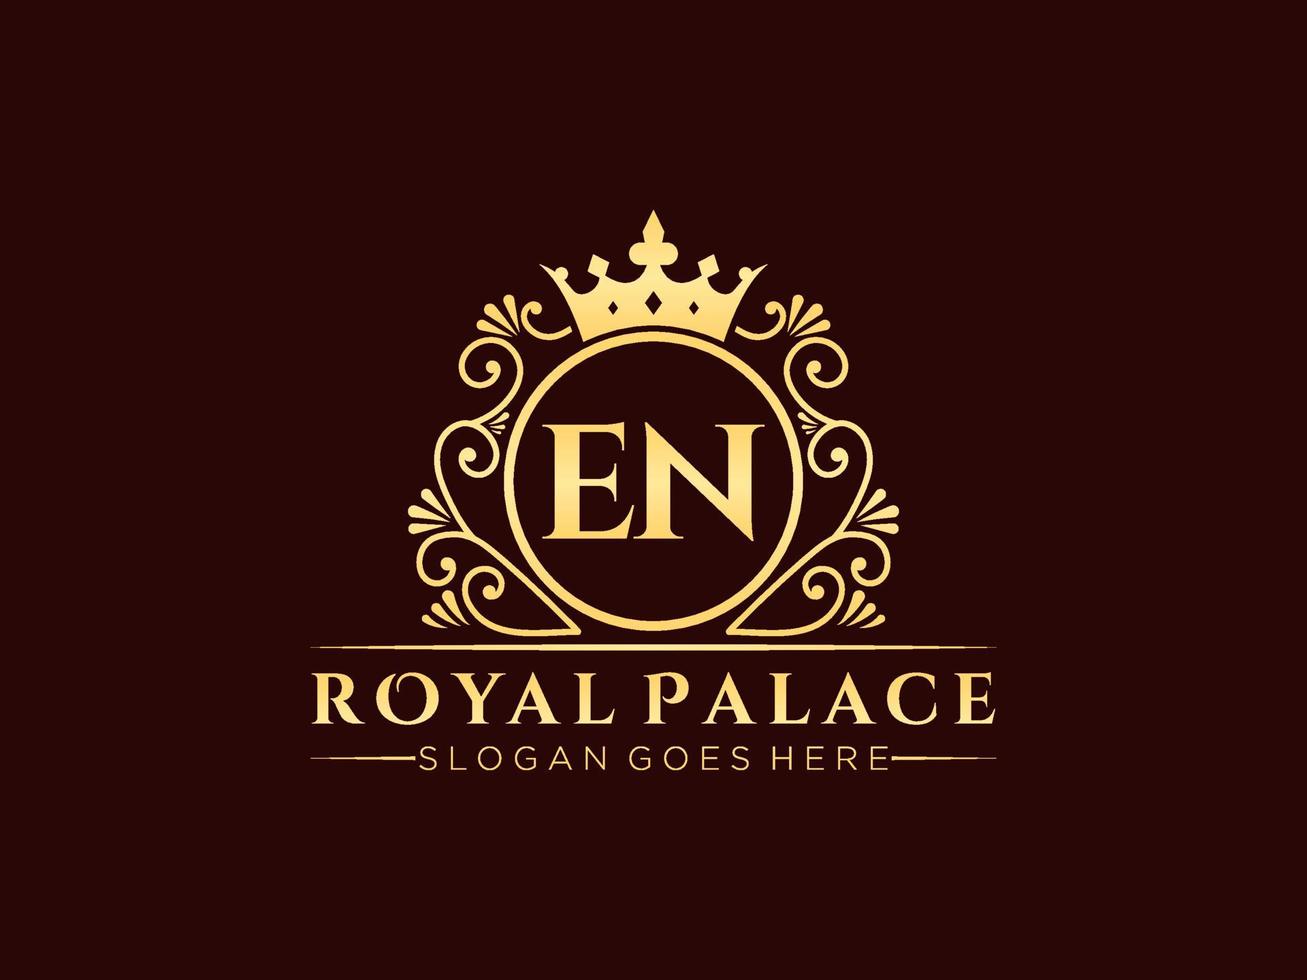 Letter EN Antique royal luxury victorian logo with ornamental frame. vector